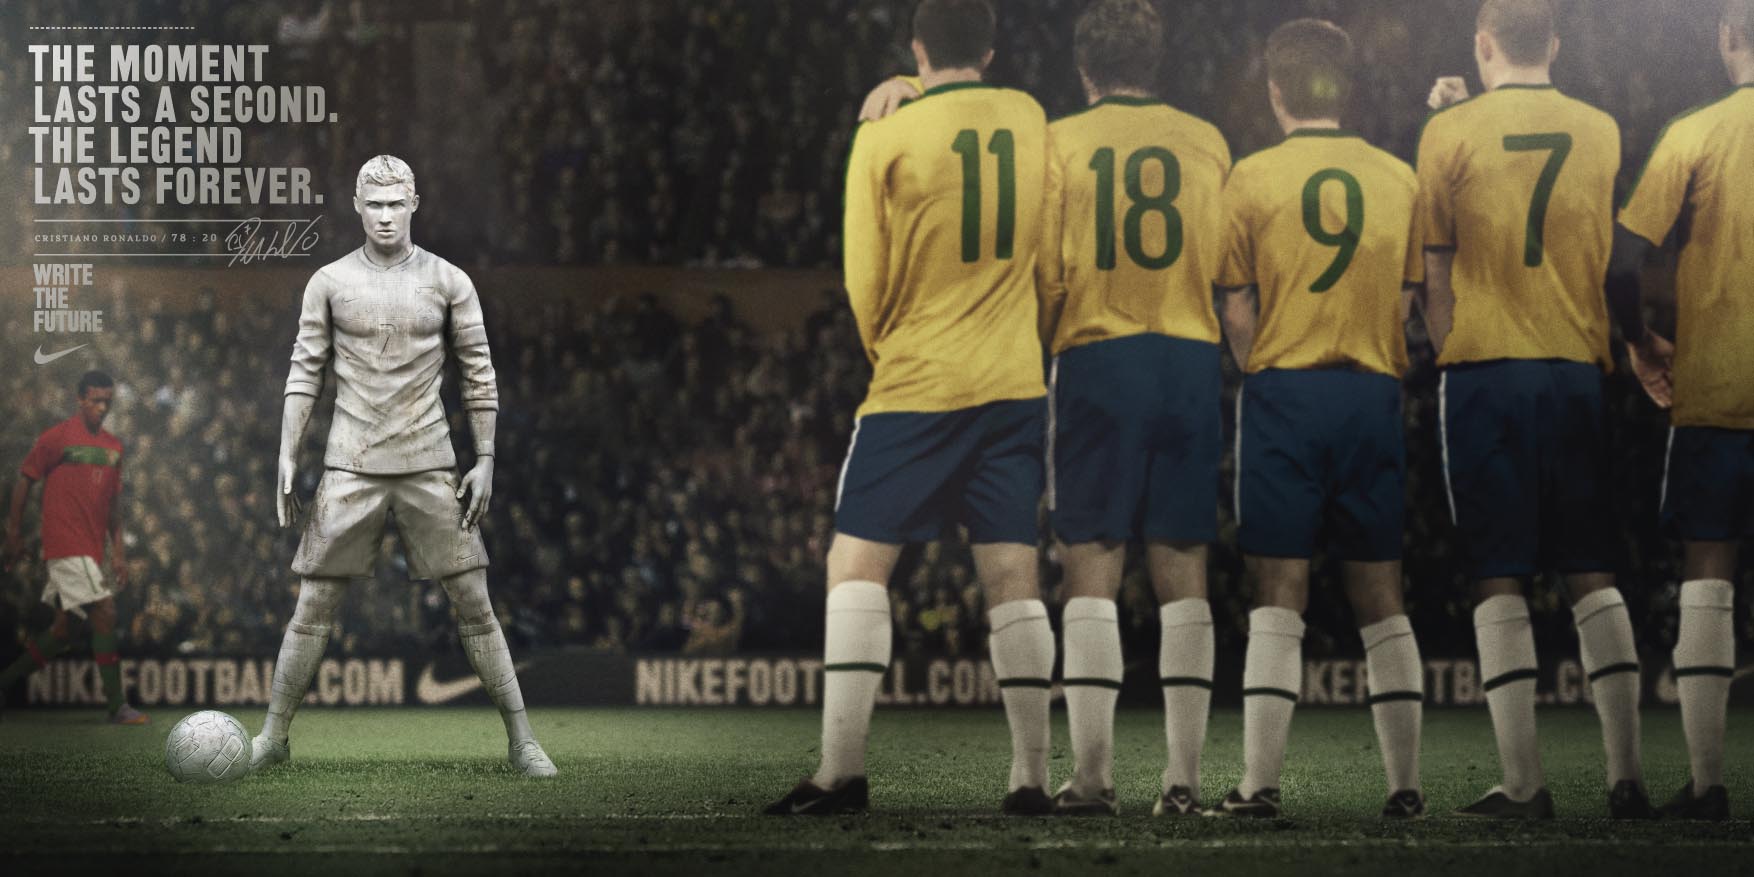 Tendero Miedo a morir impulso 5 Nike 'Write The Future' World Cup Print Ads